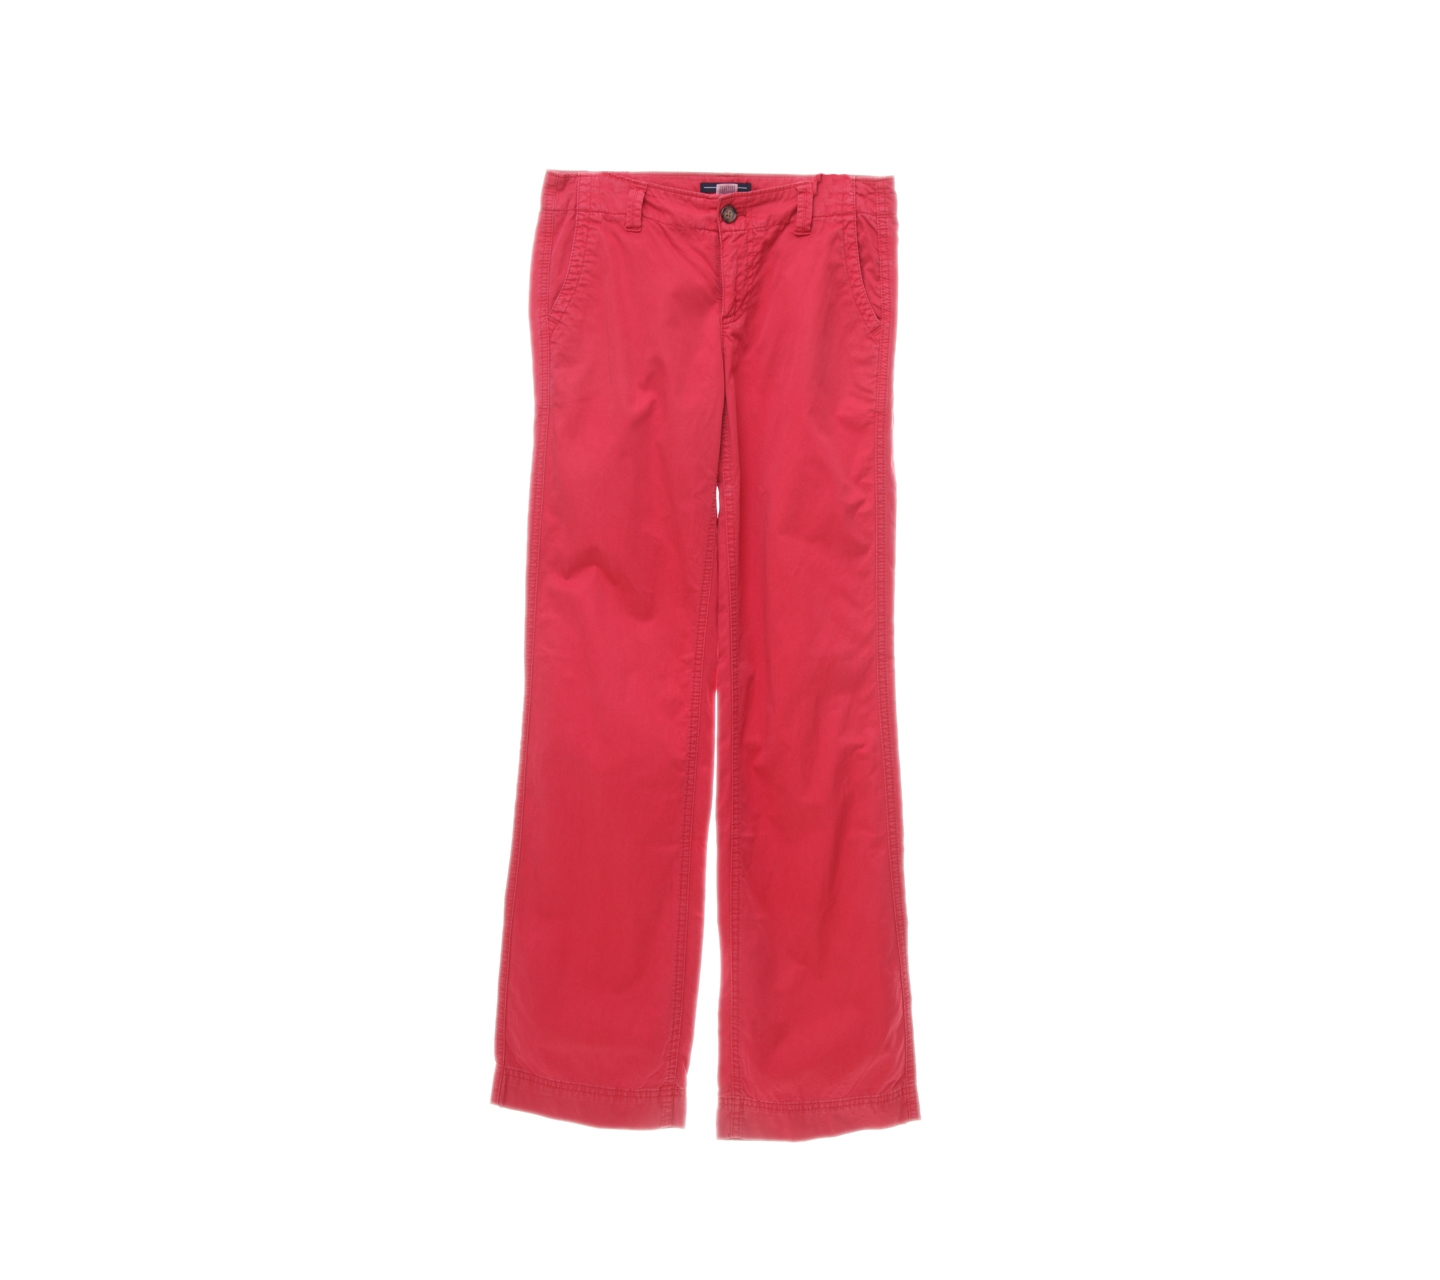 Gap Red Long Pants